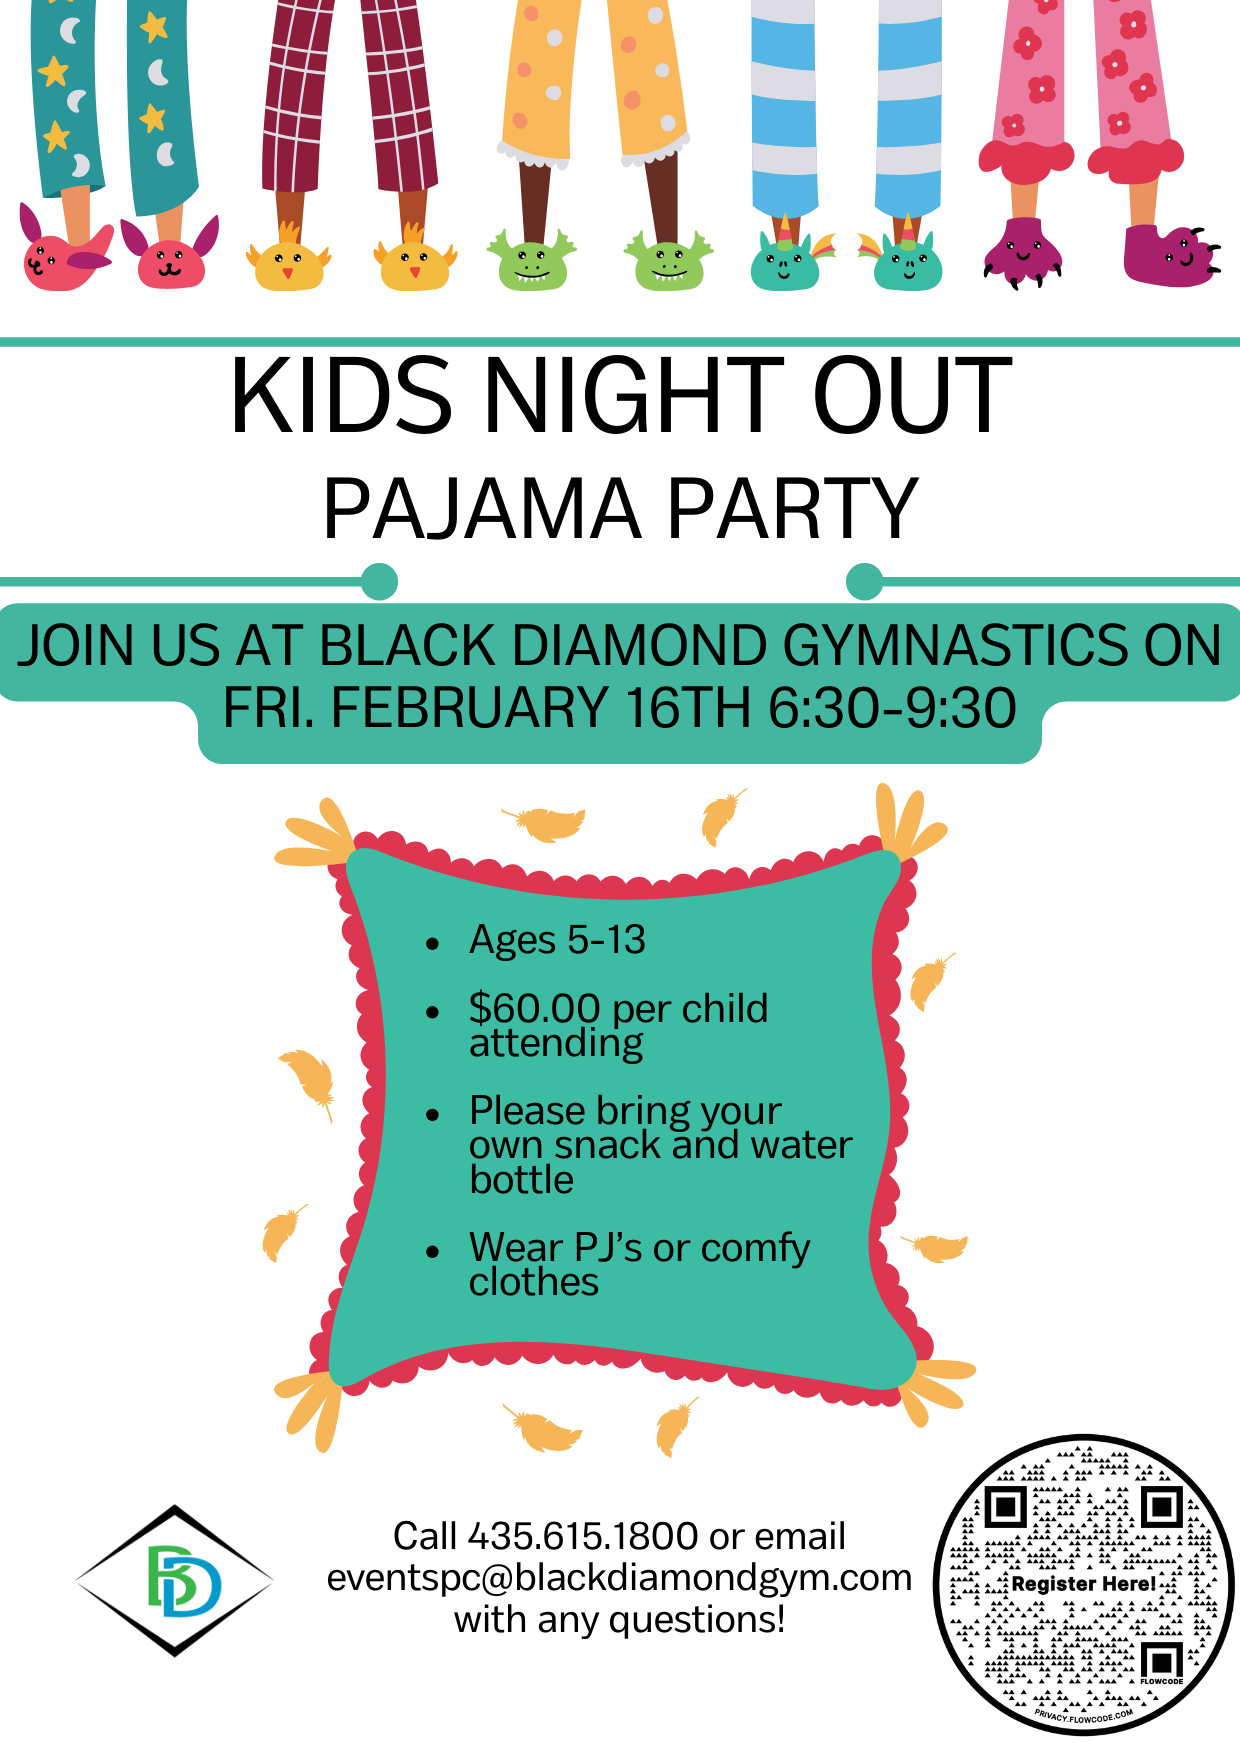 Pajama Party Kids Night Out